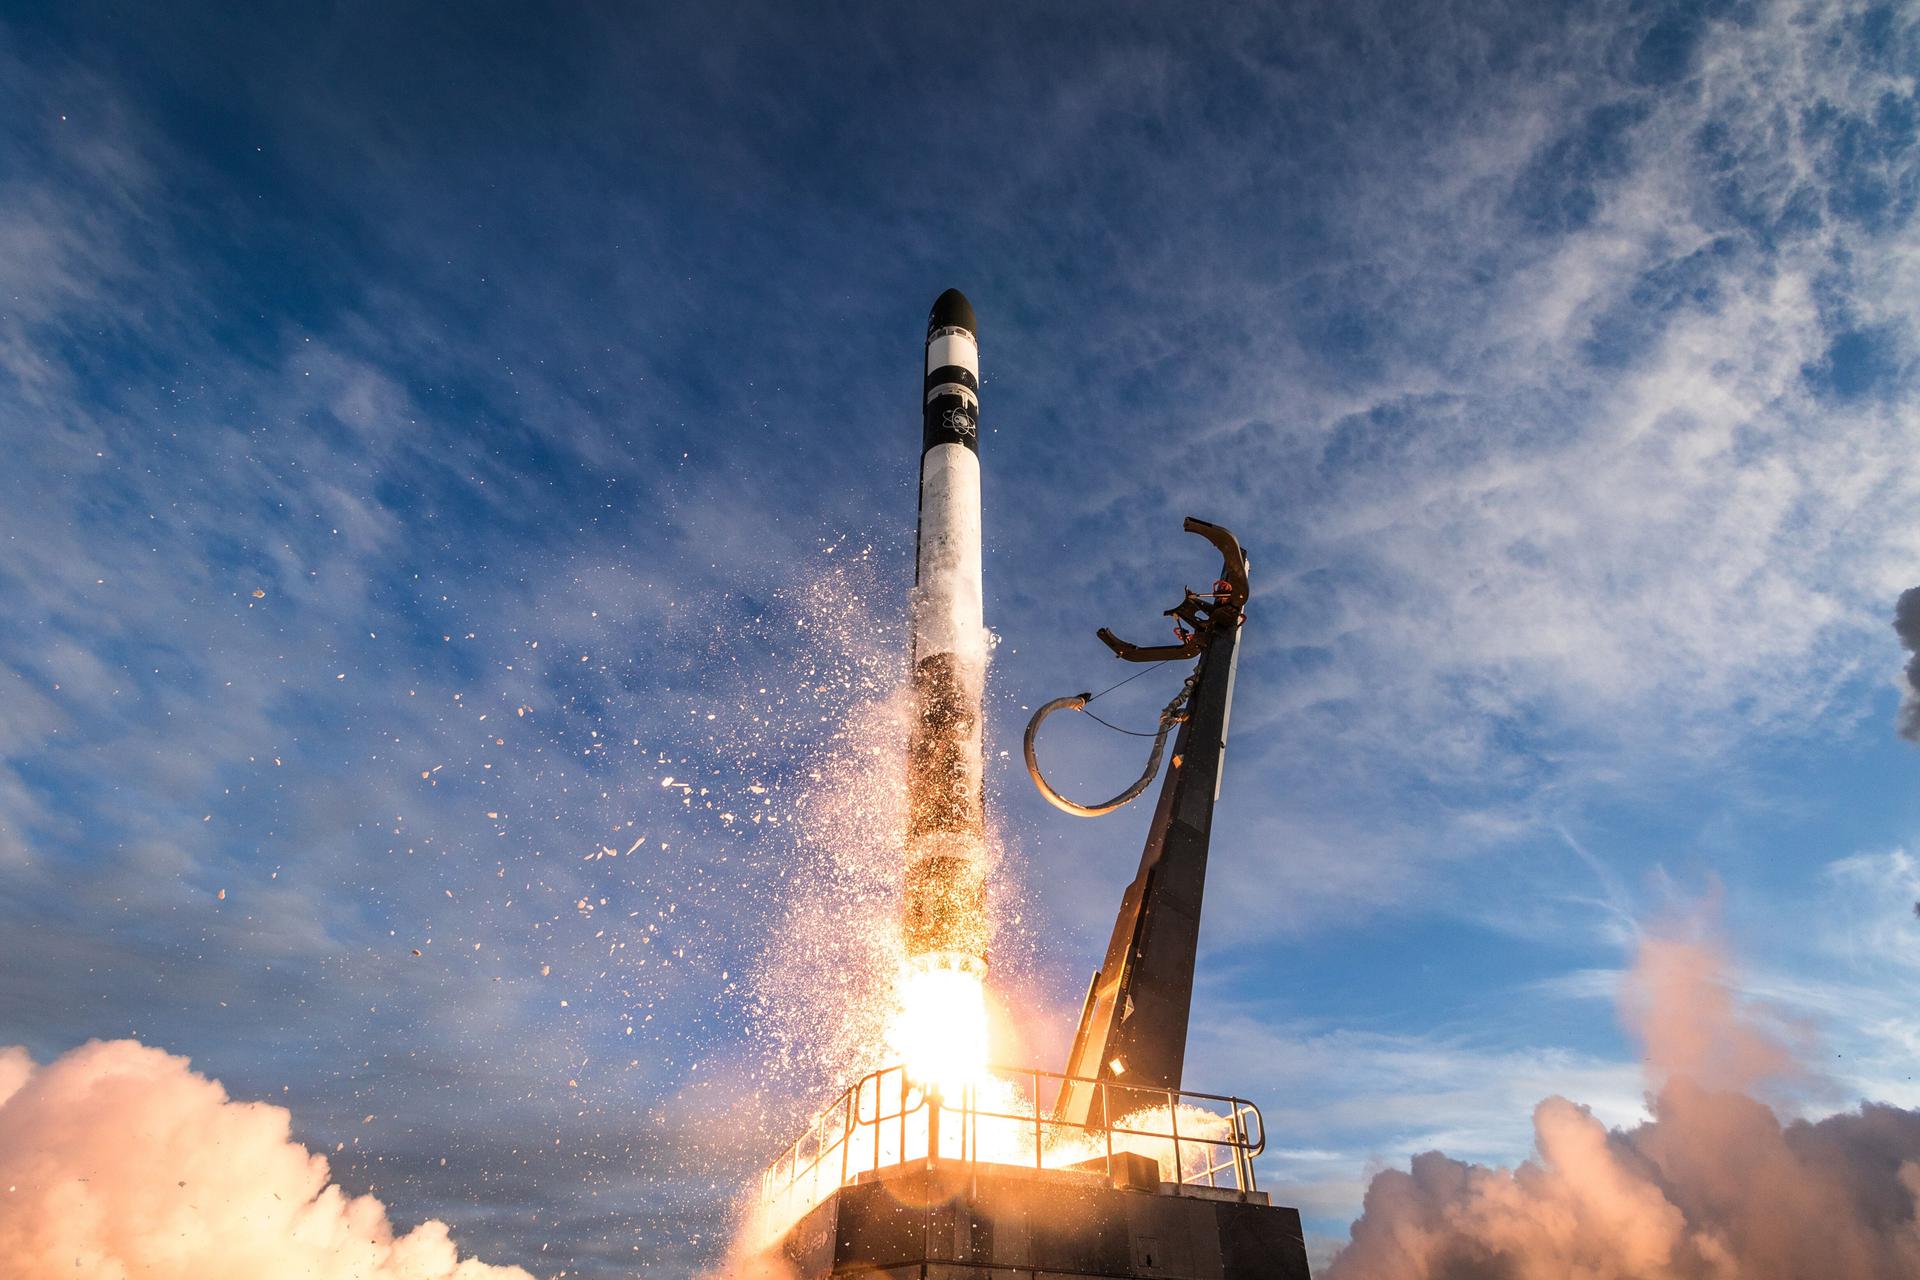 rocket launch schedule january 2021